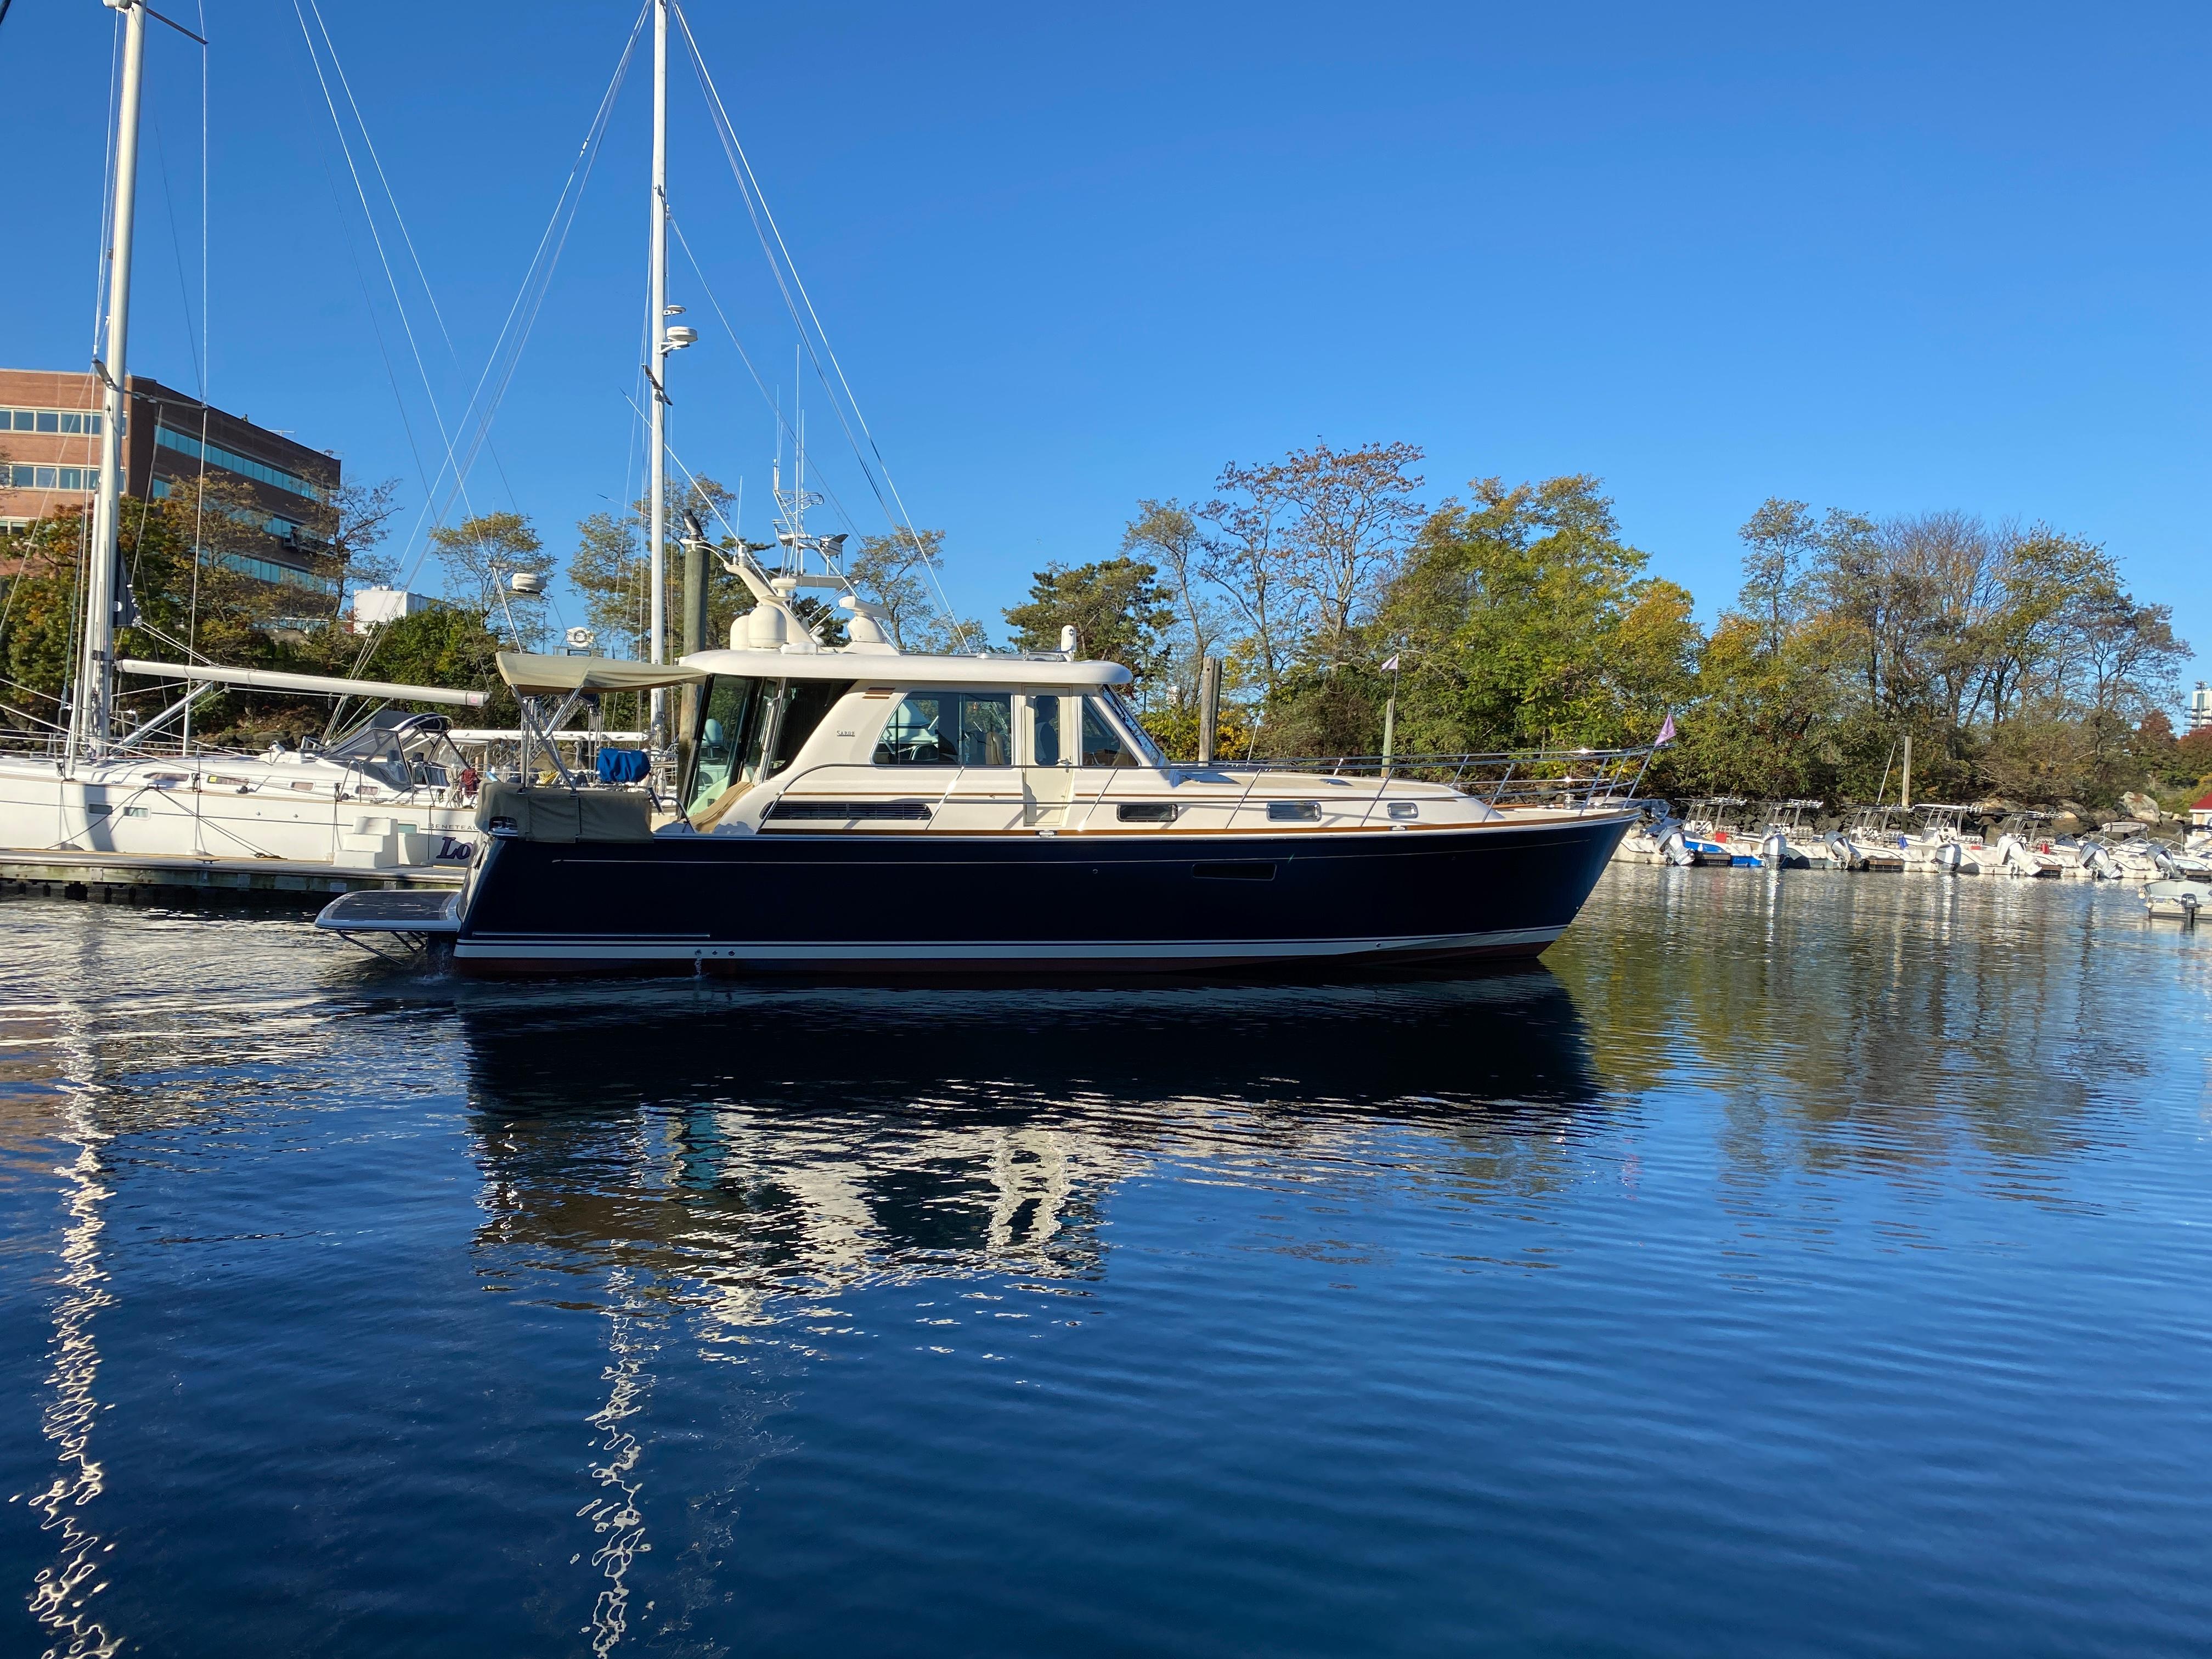 Sabre 48 Salon Express Yacht for Sale | 48 Sabre Yachts Glen Cove, NY | Denison Yacht Sales